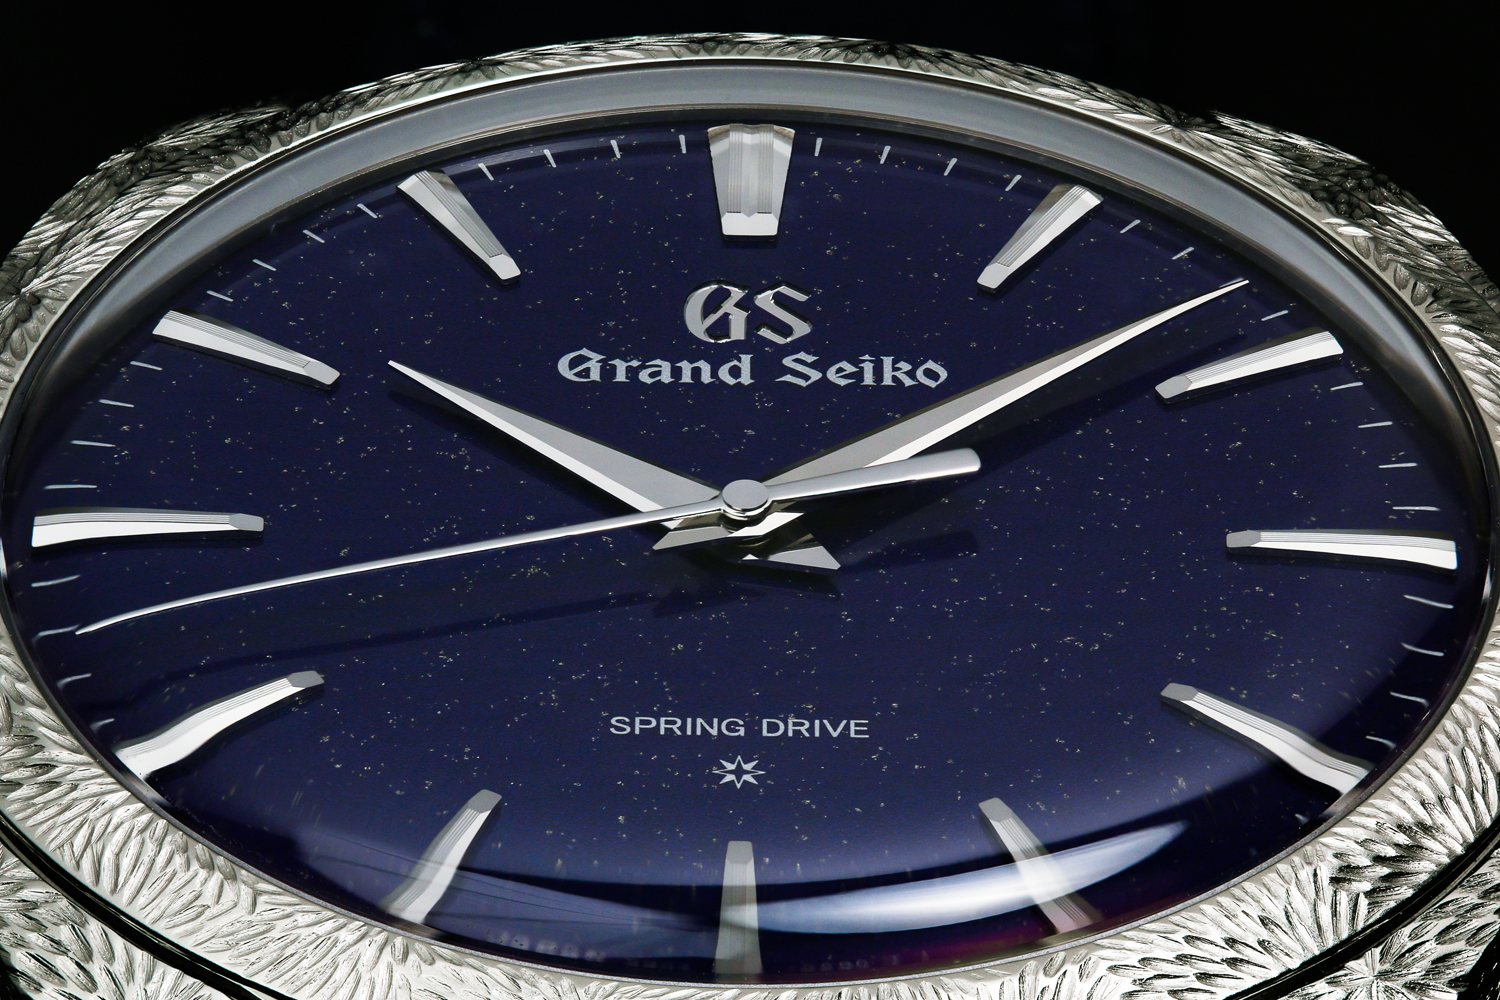 Introducing: The Grand Seiko SBGZ007 evokes the starry skies of Japan